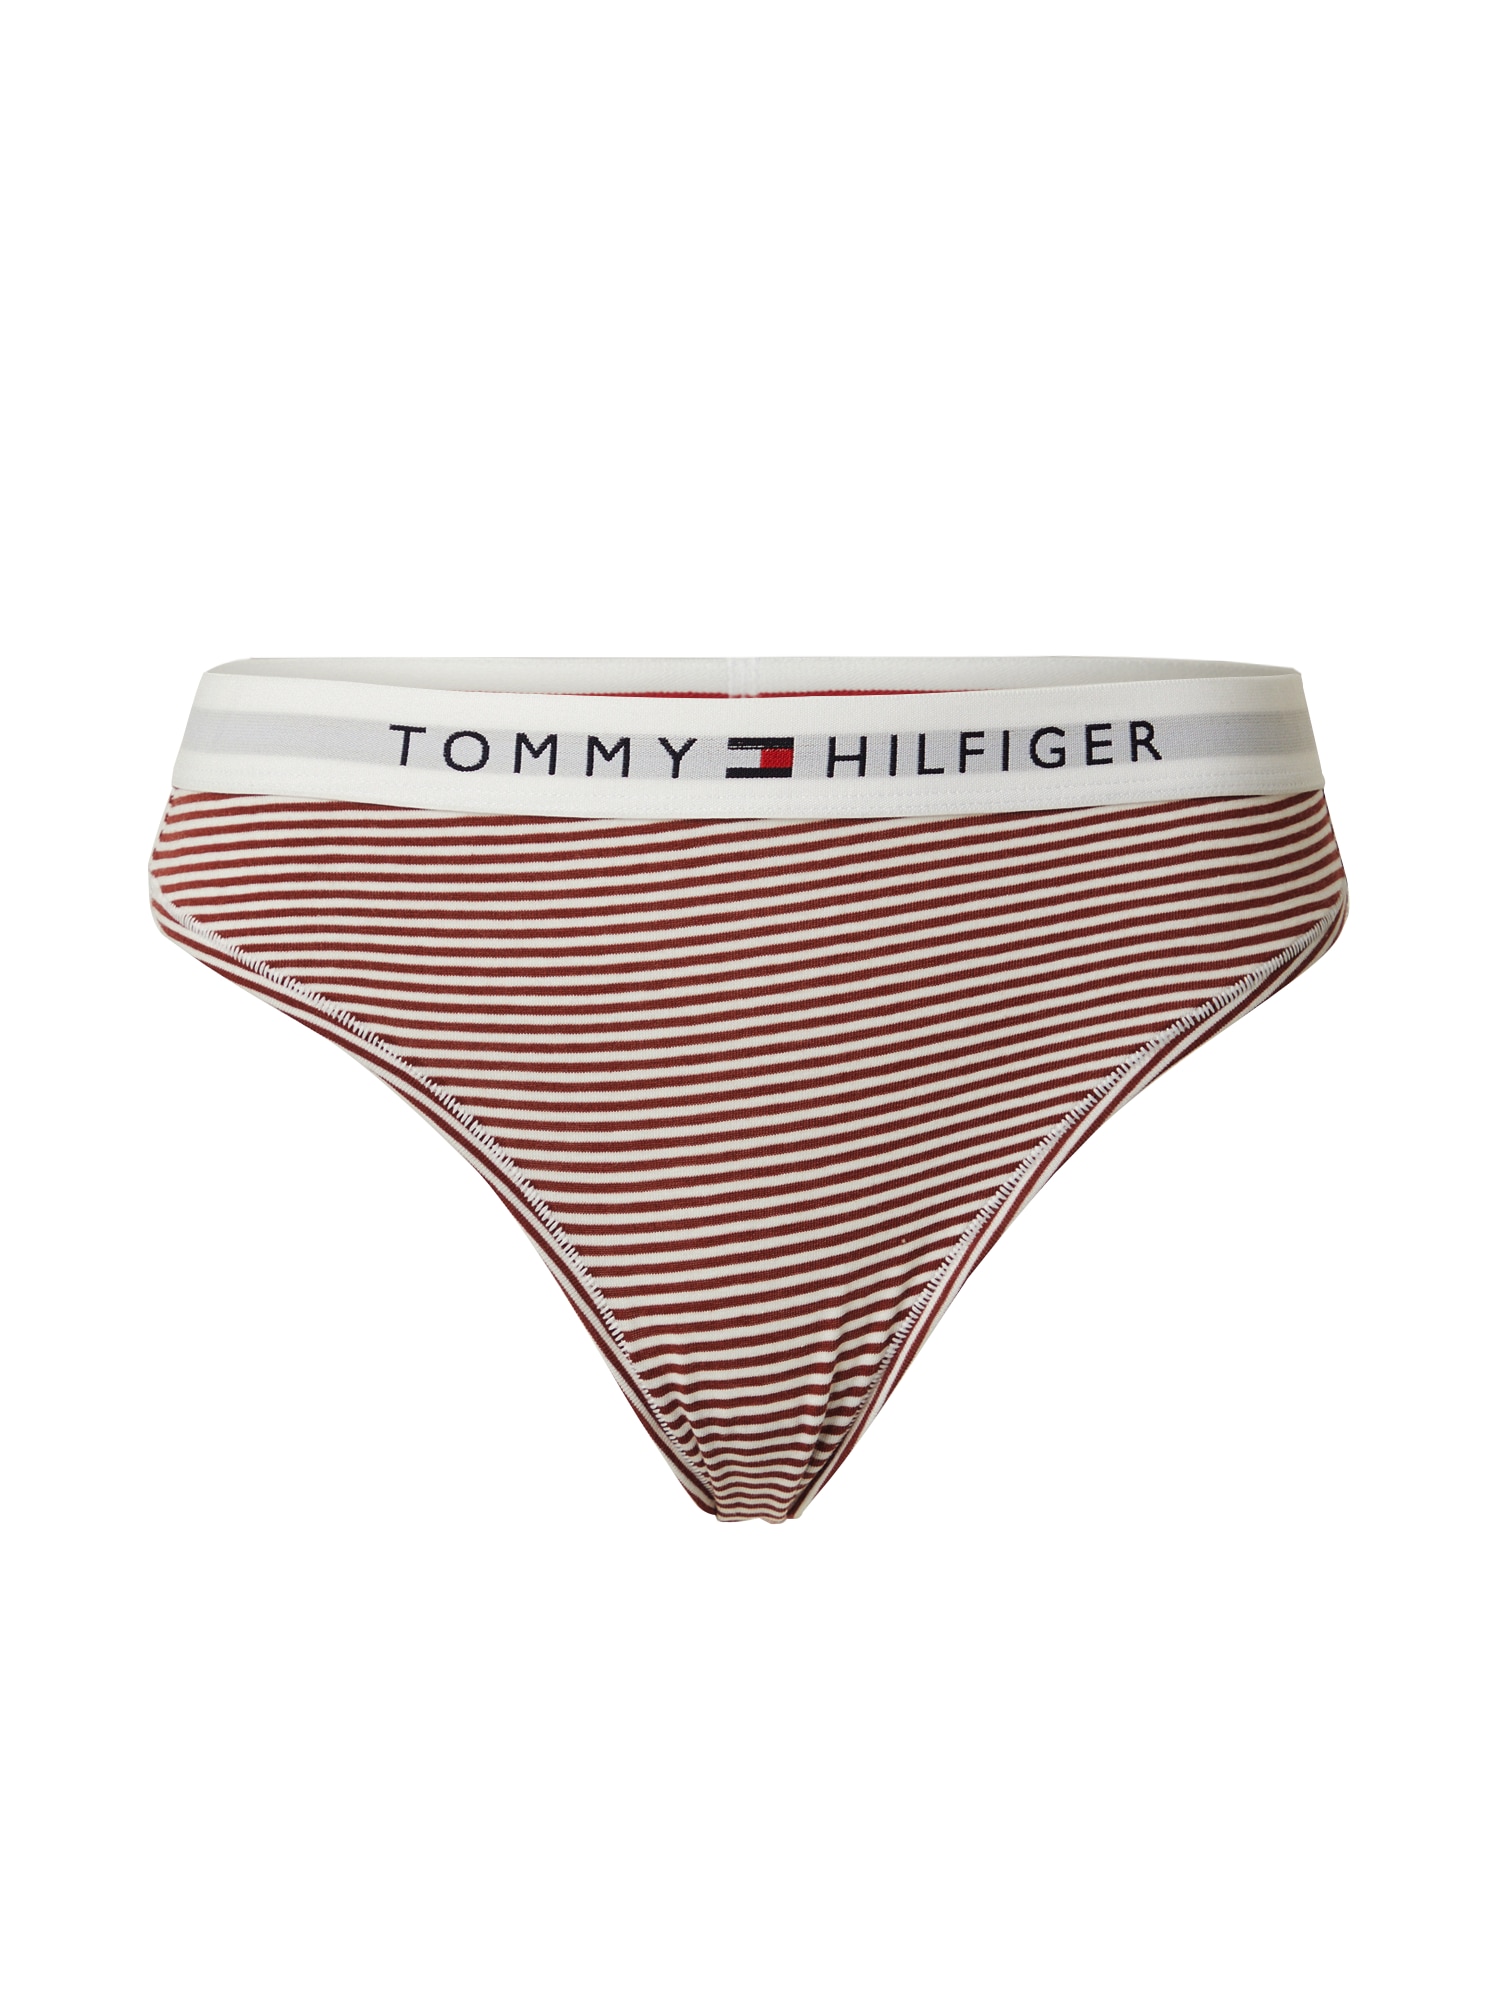 Tommy Hilfiger Underwear Siaurikės tamsiai mėlyna / ruda / raudona / balta